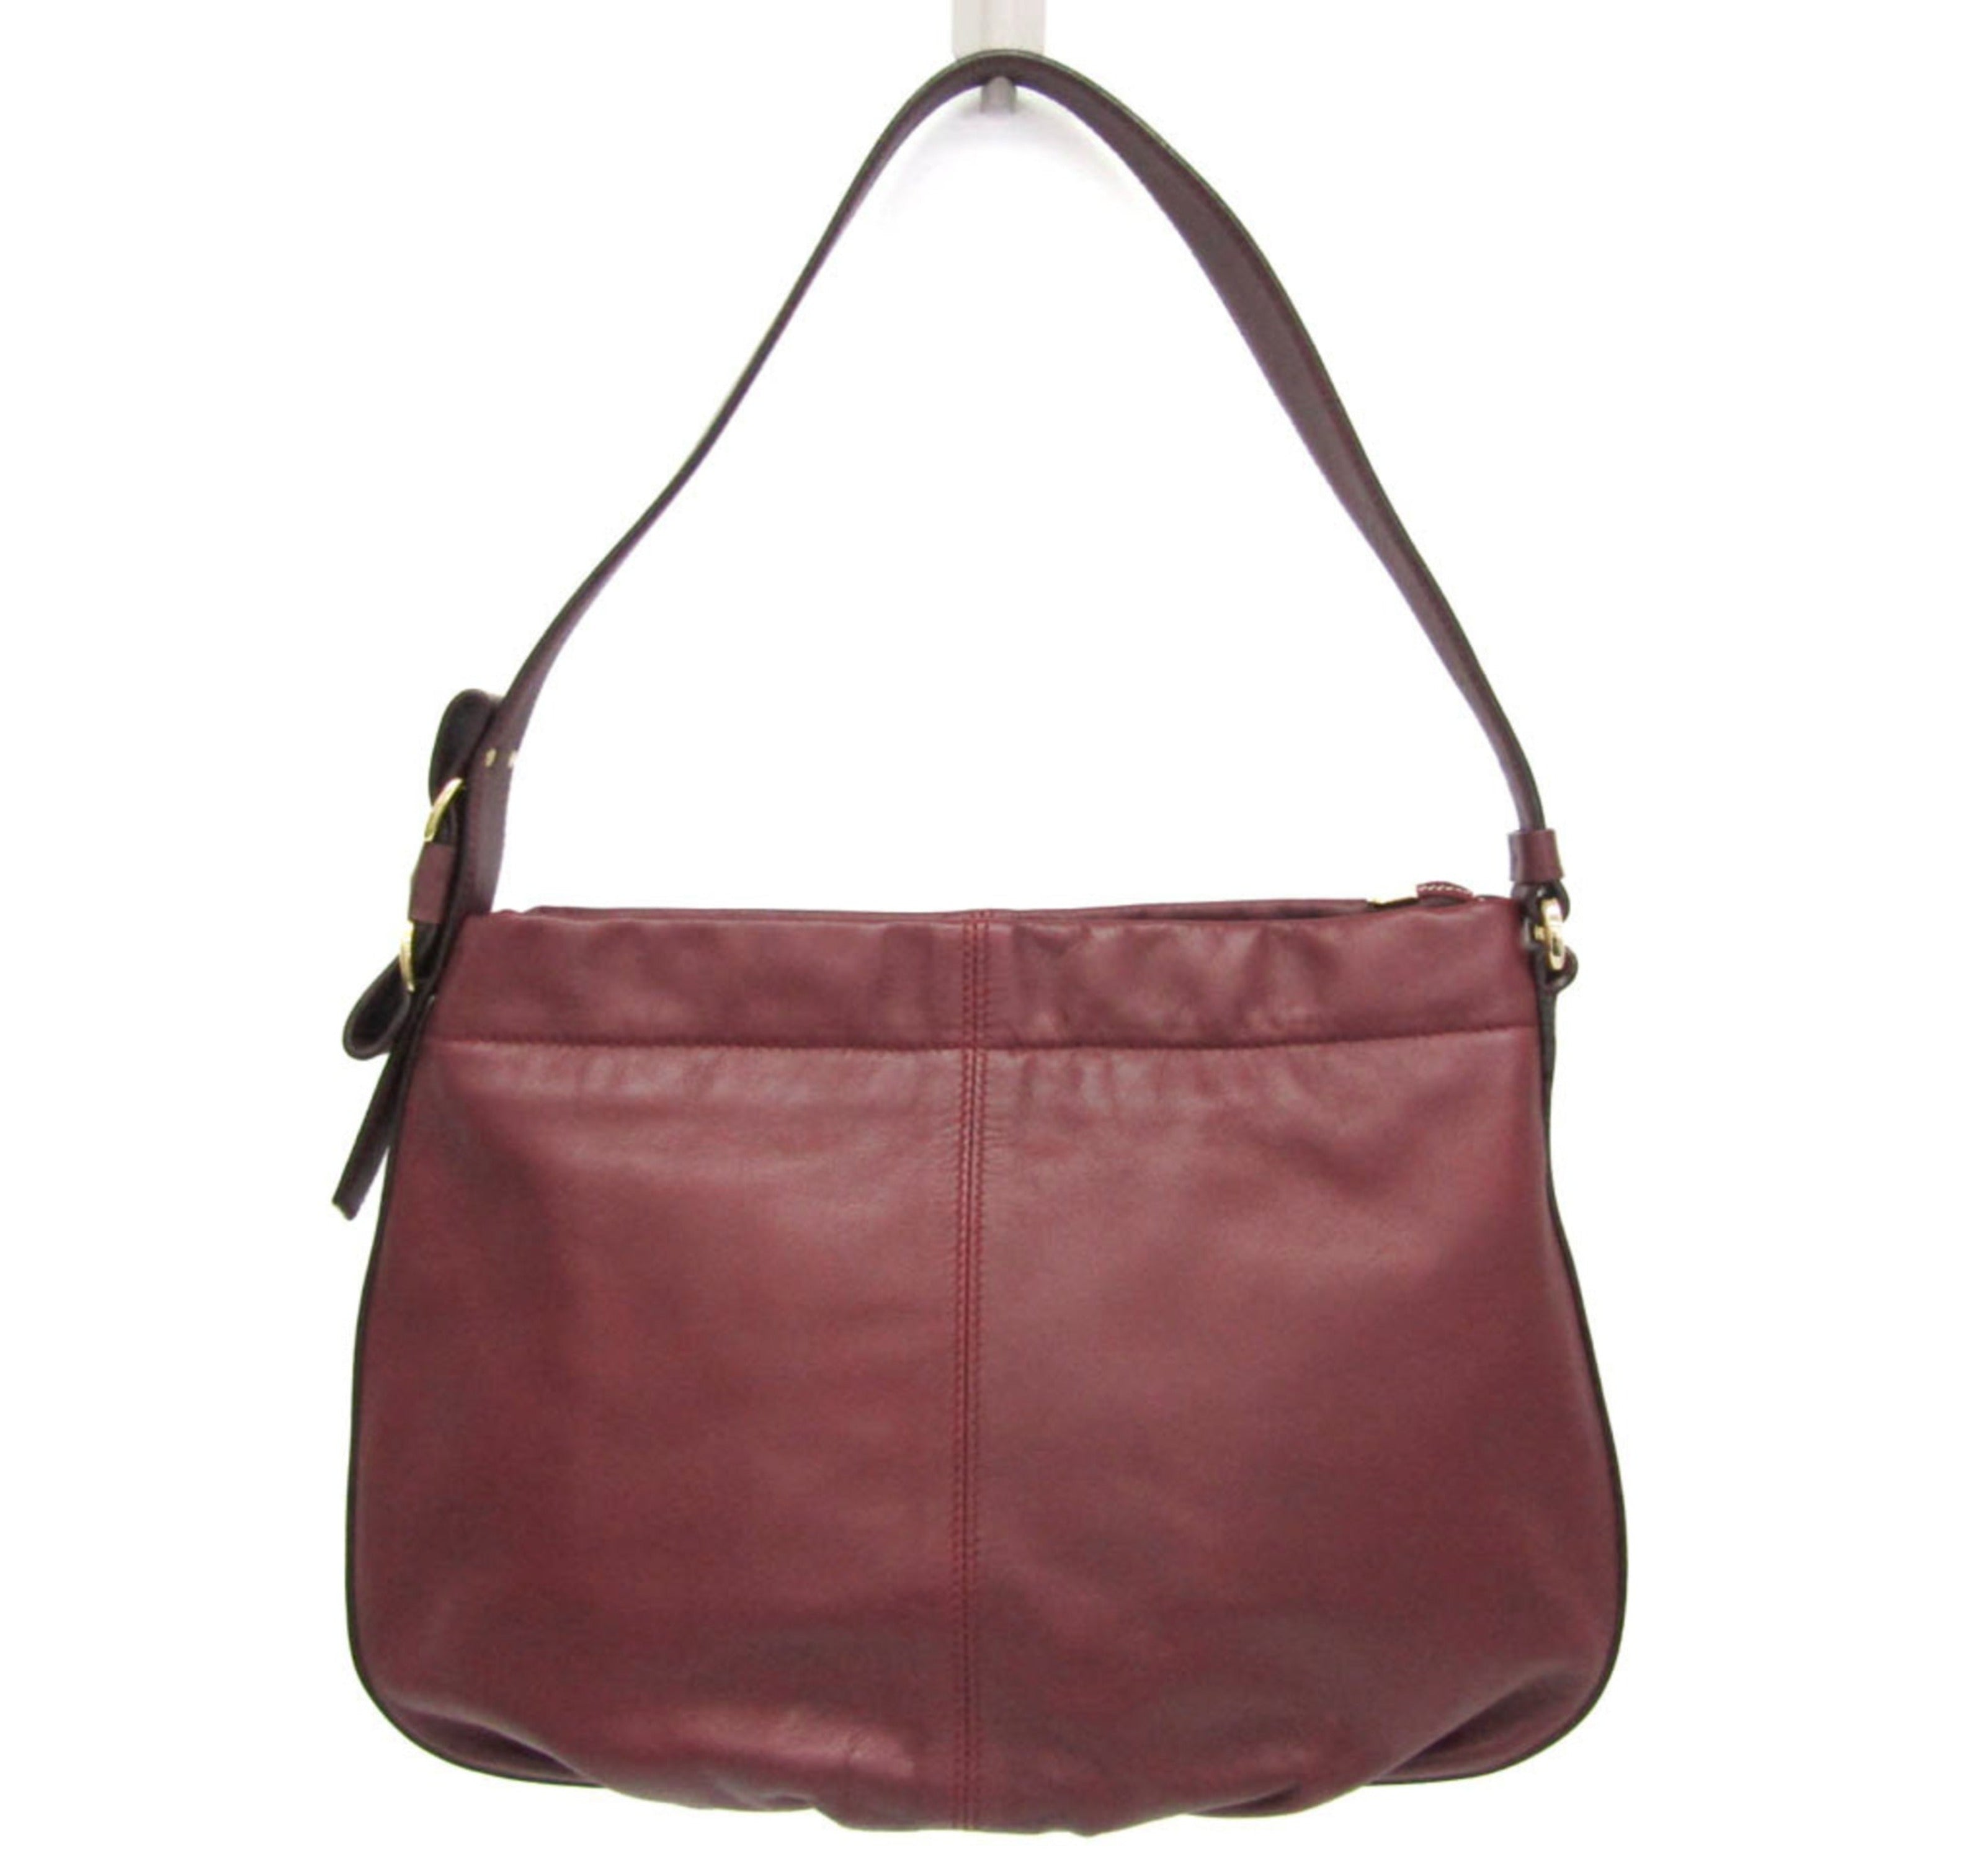 Salvatore Ferragamo AU 21 D443 Women's Leather Shoulder Bag Burgundy-0